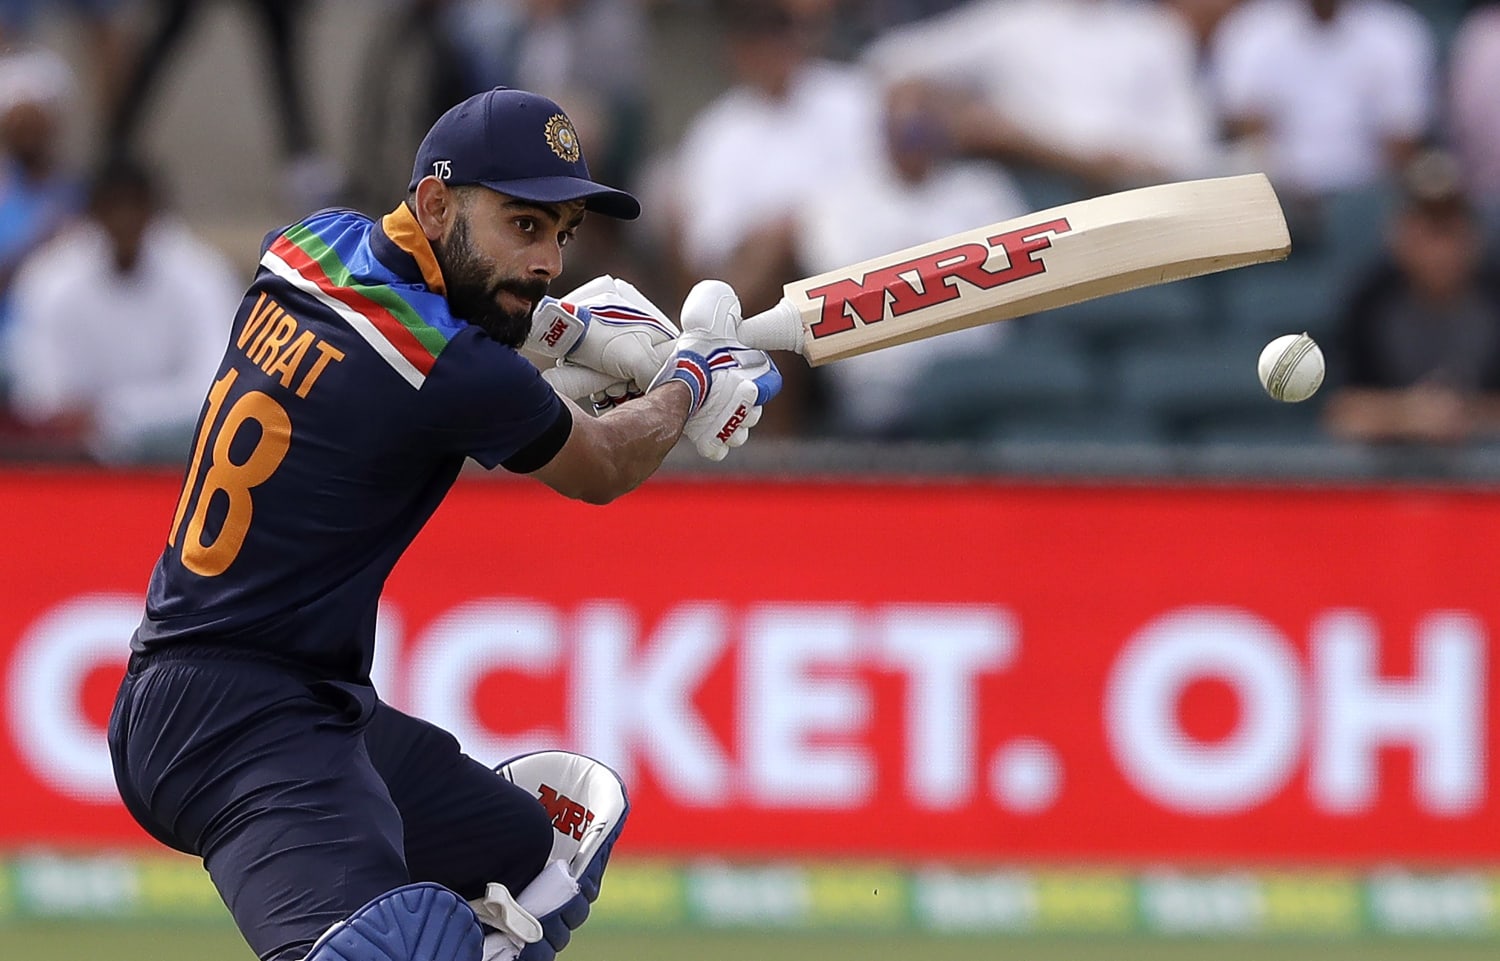 India's Kohli tops 12,000 ODI runs in victory over Australia